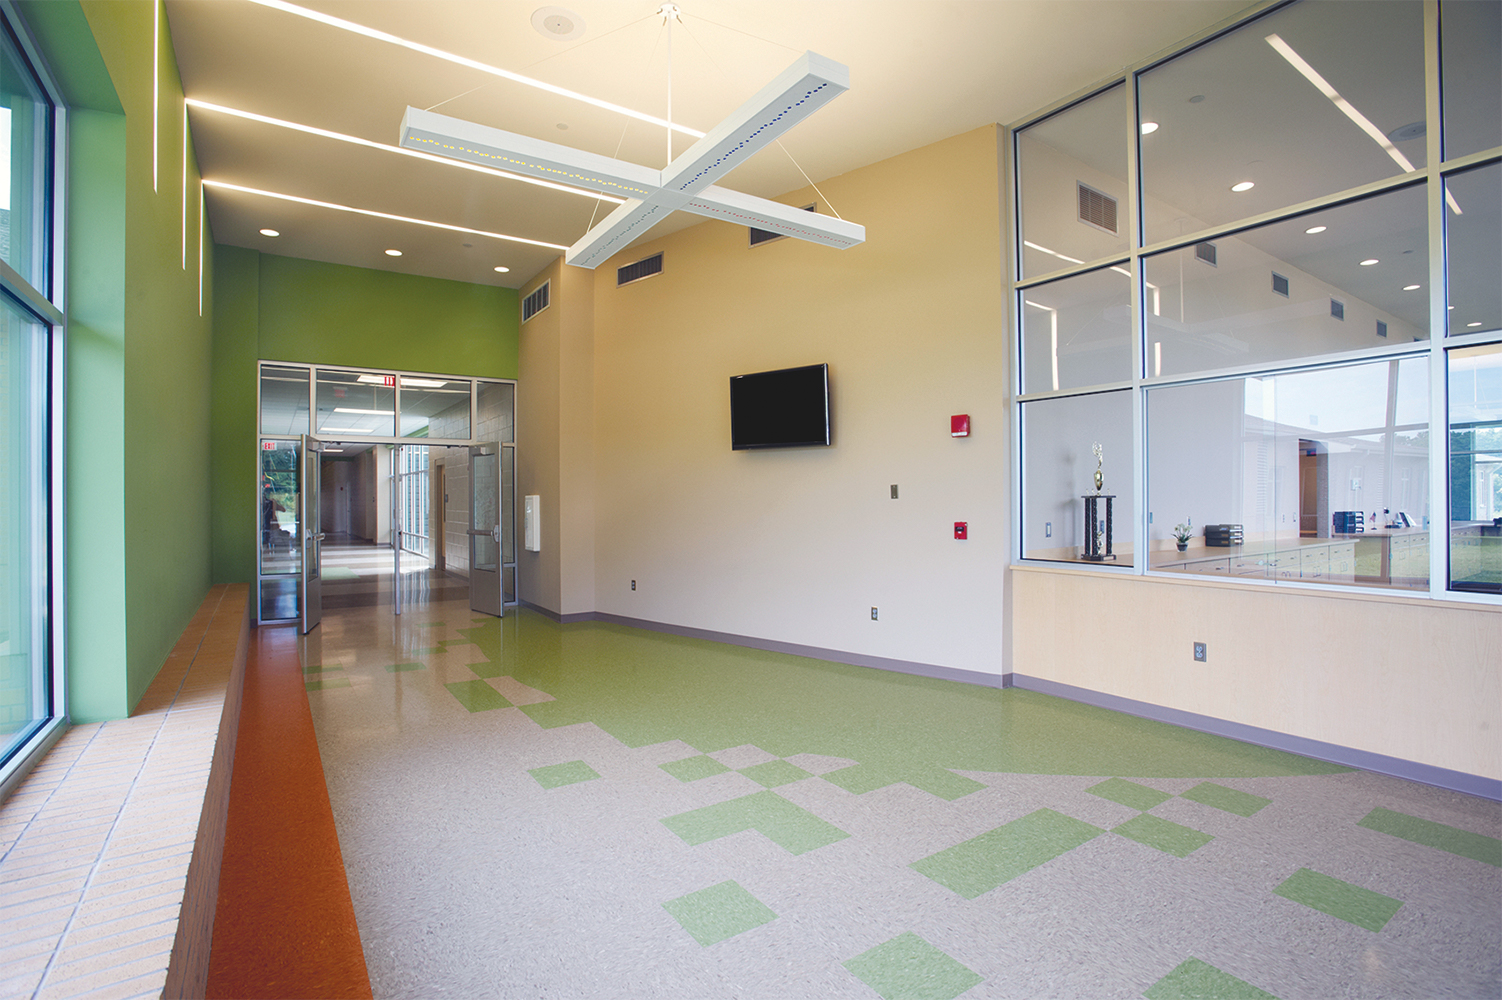 Infinity Performance configurable pendant in educational interior design above school hallway.